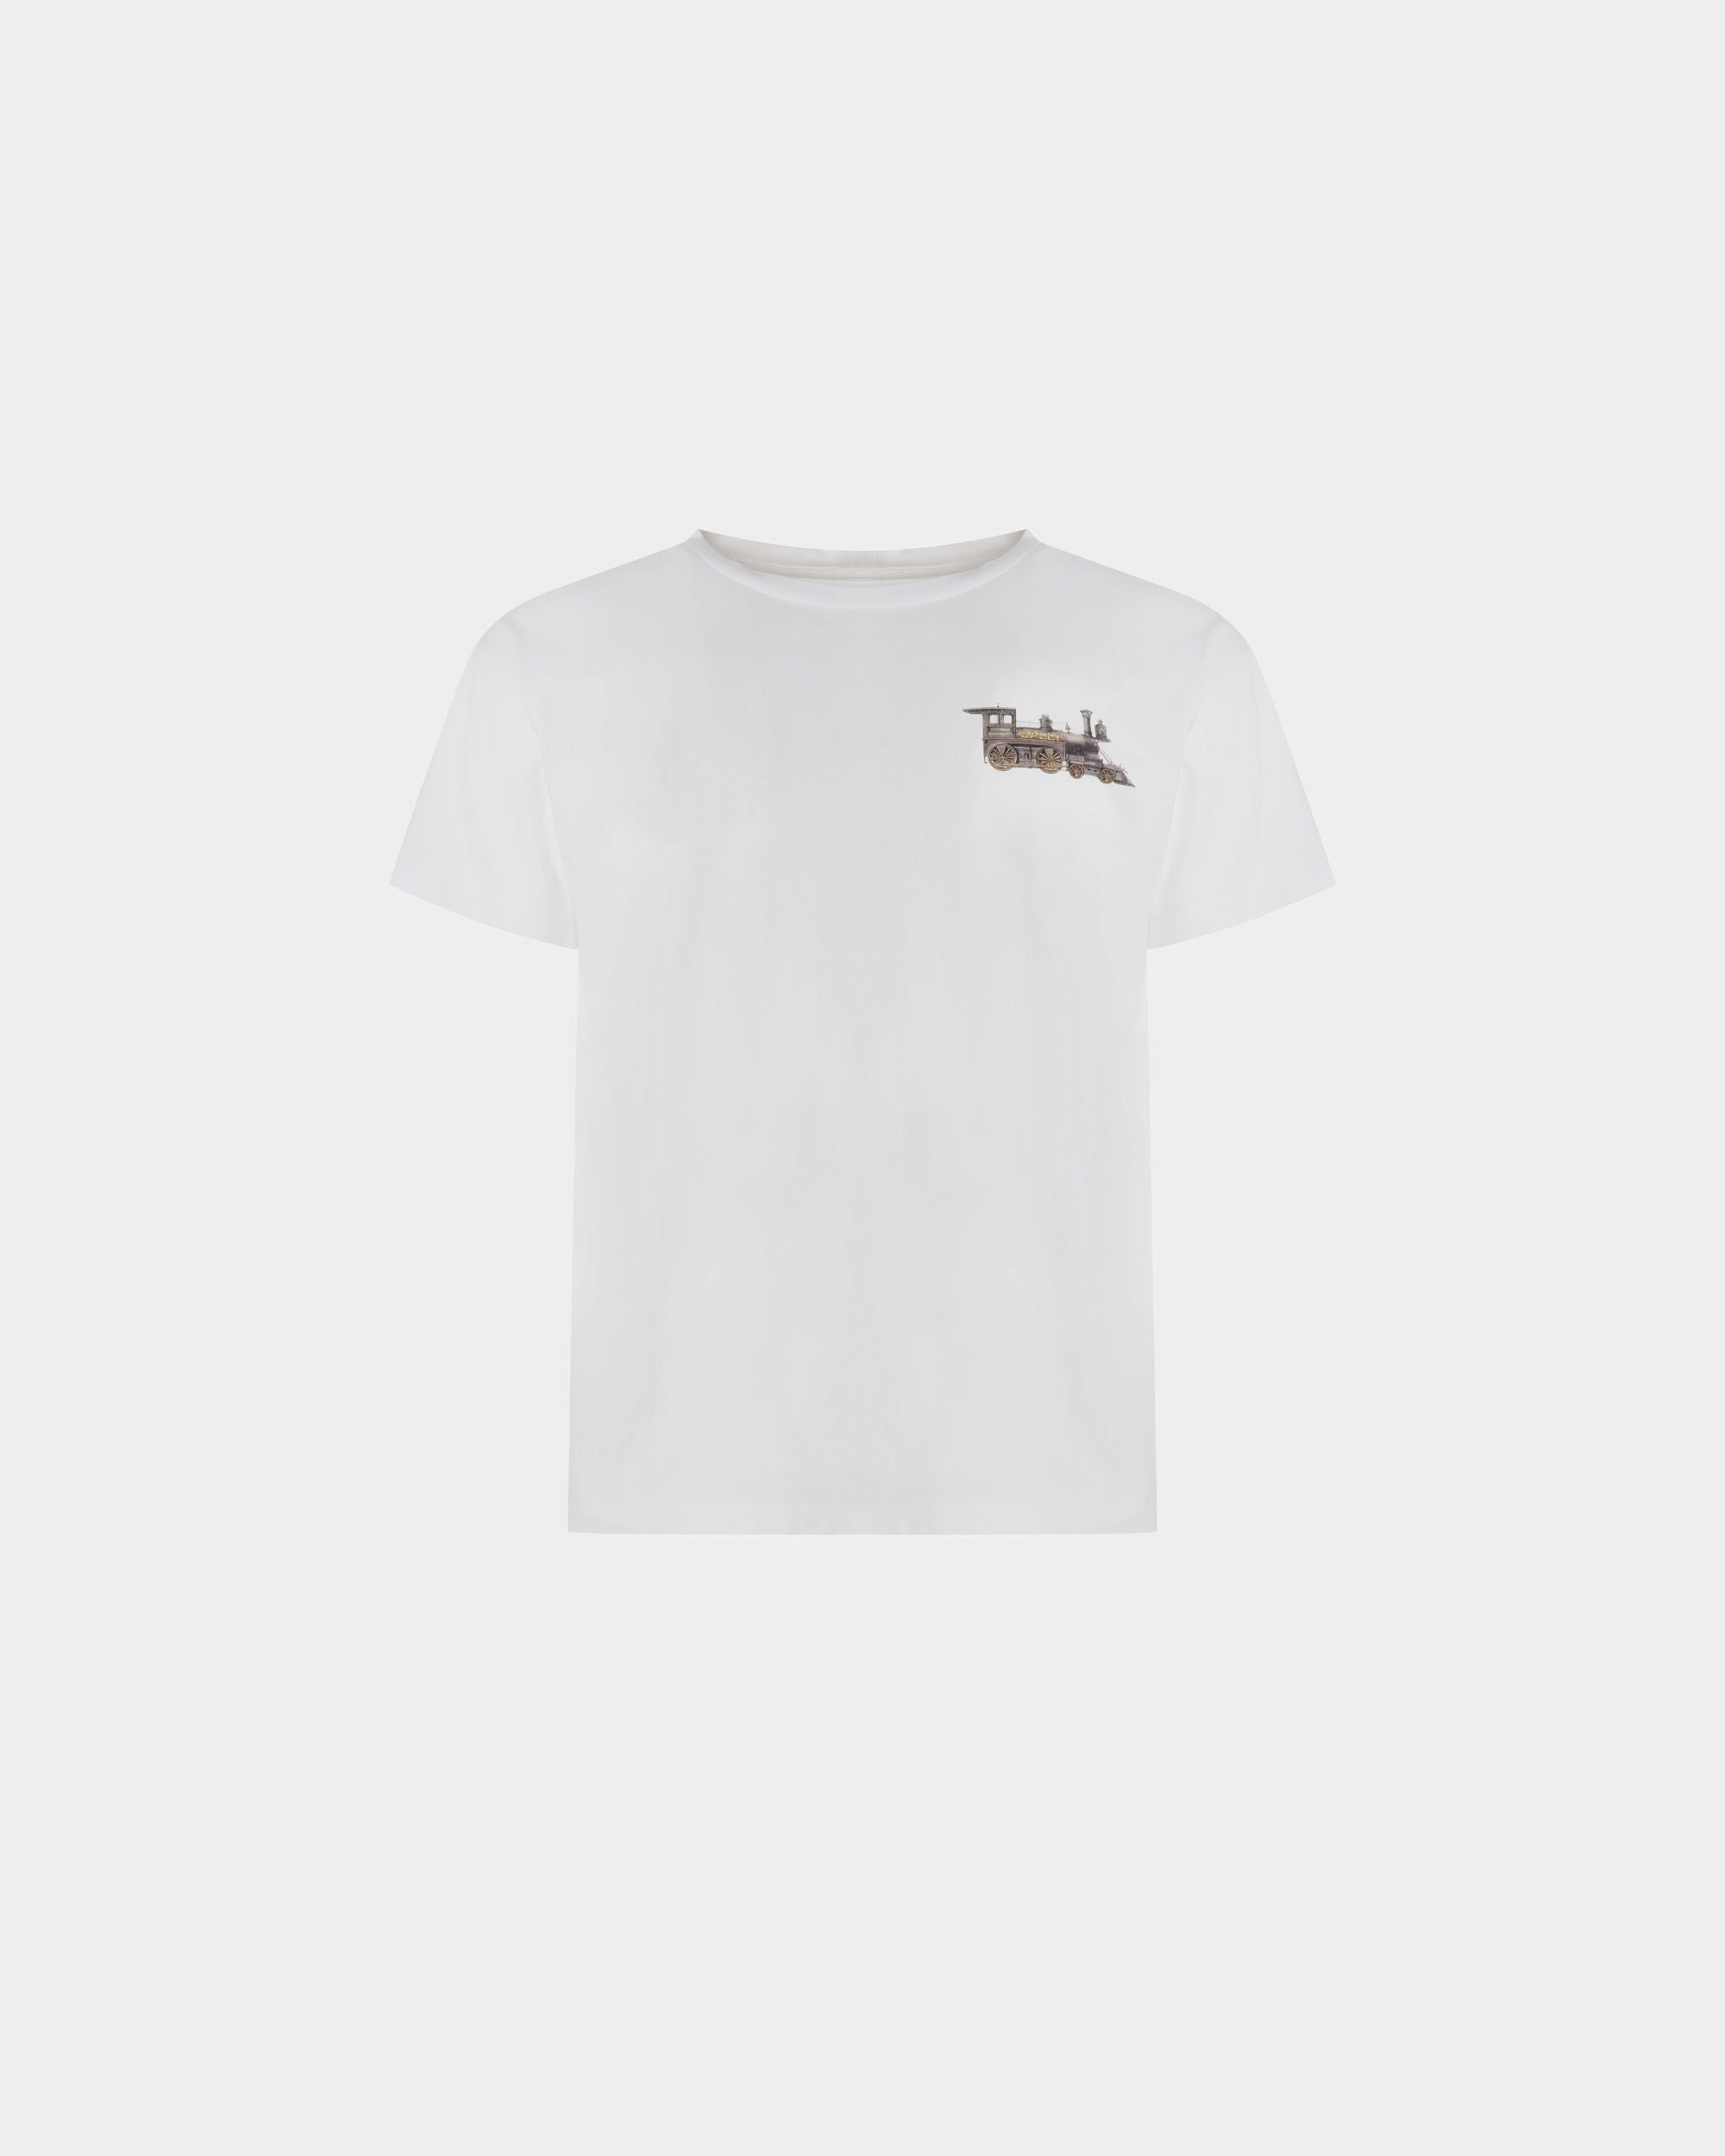 Train Motif T-Shirt | Men's T-Shirt | White Cotton | Bally | Still Life Front